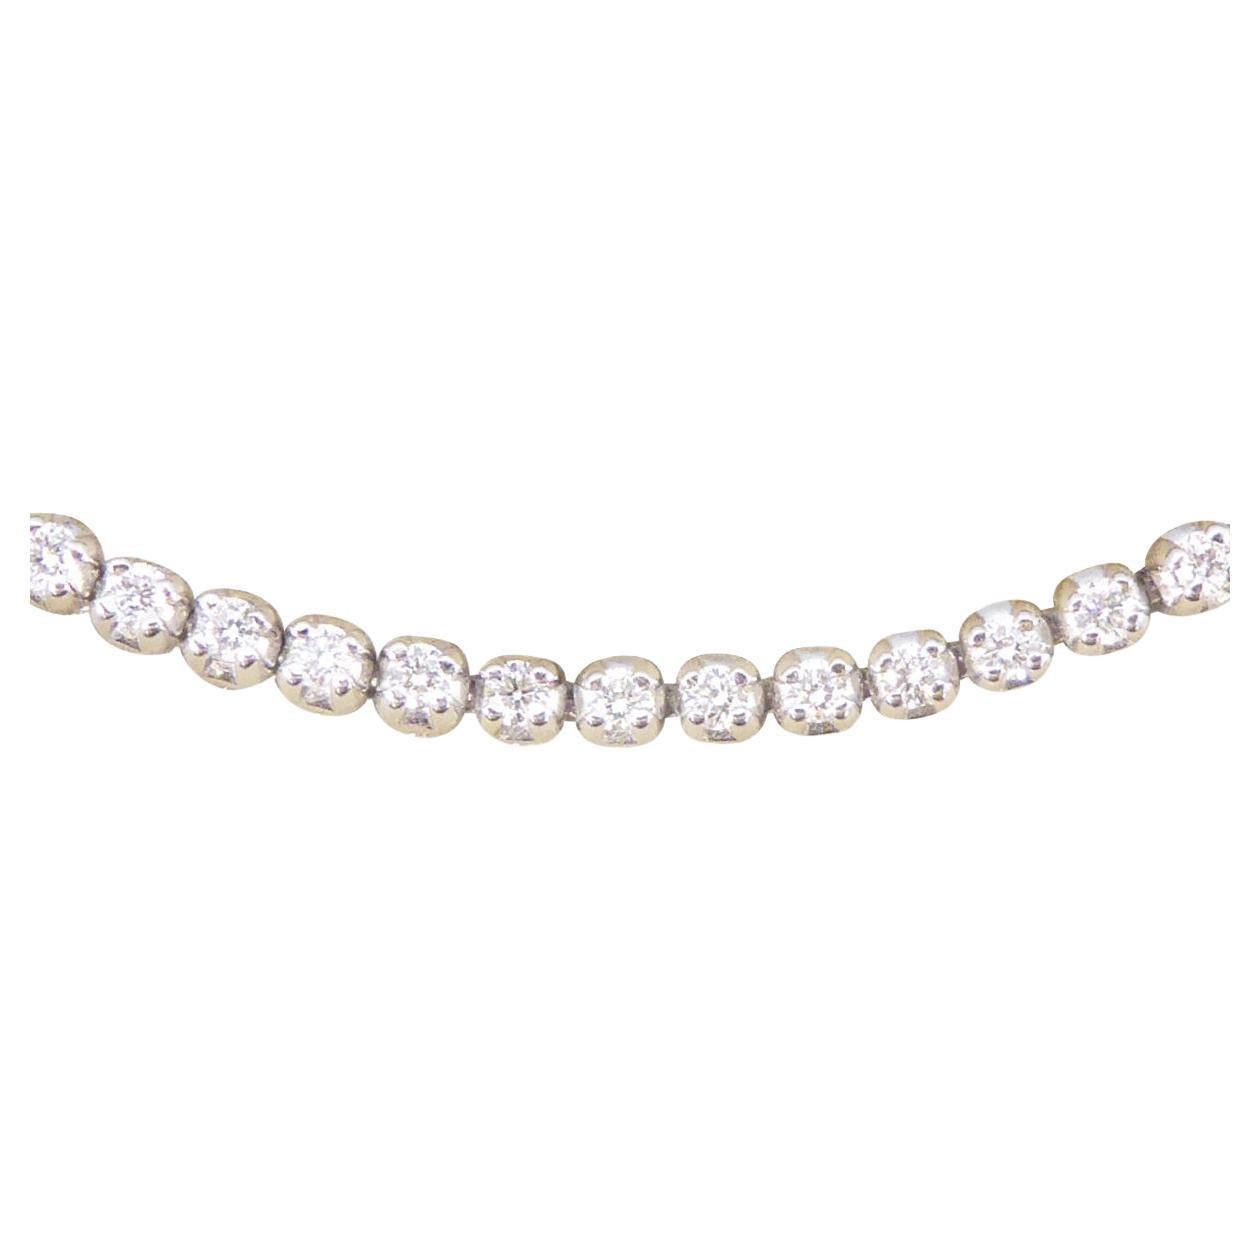 2.00ct Diamond Flexi-Link Tennis Bracelet in 18ct White Gold